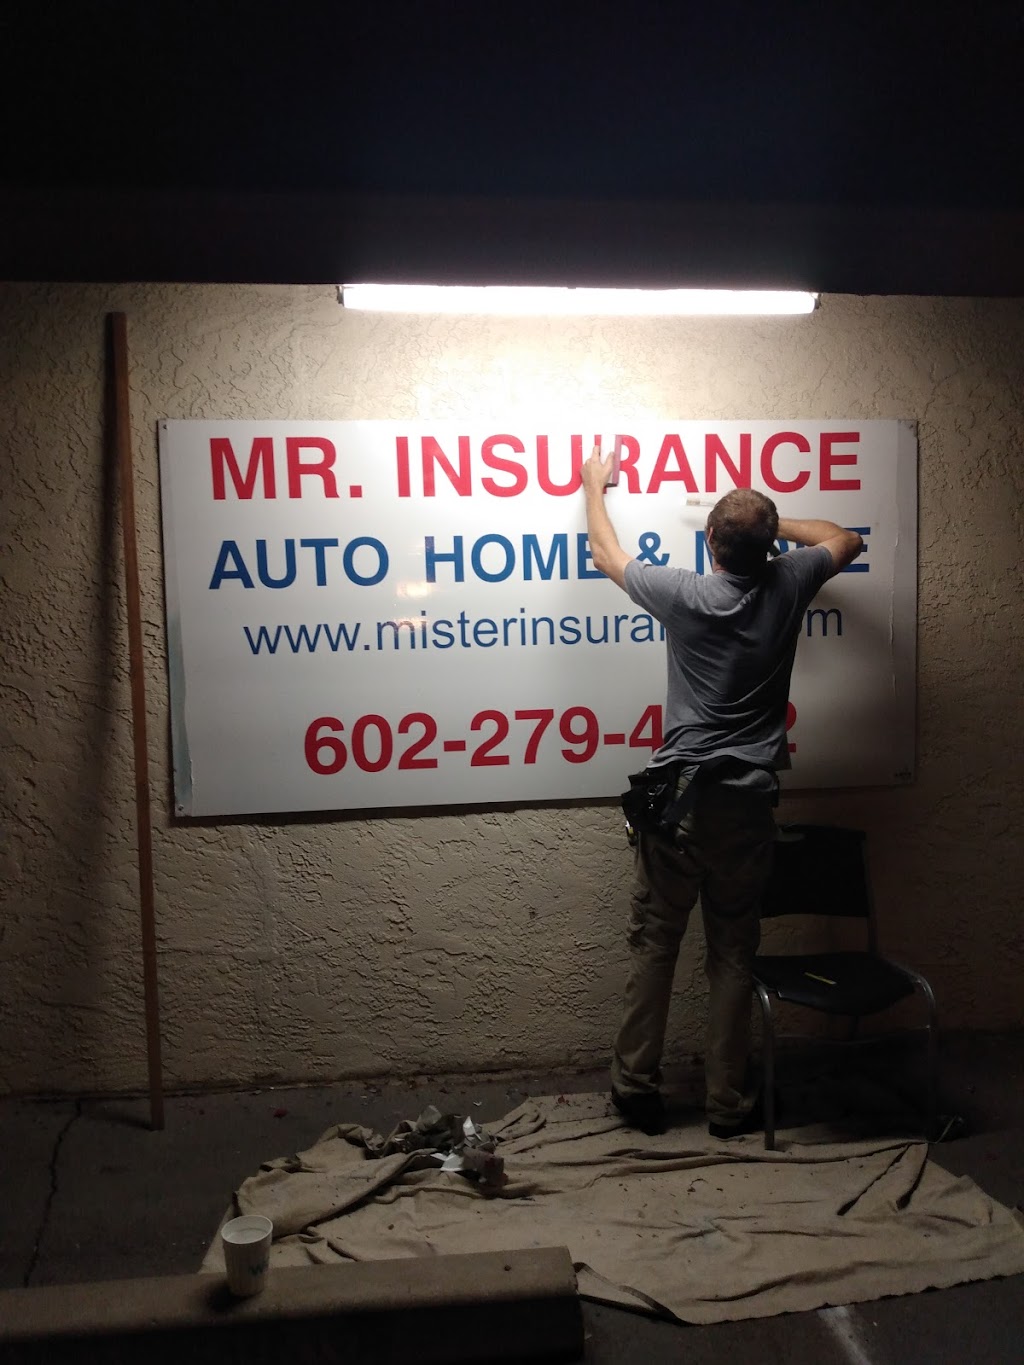 Mr. Insurance, Inc. | 1314 W Camelback Rd, Phoenix, AZ 85013, USA | Phone: (602) 279-4322